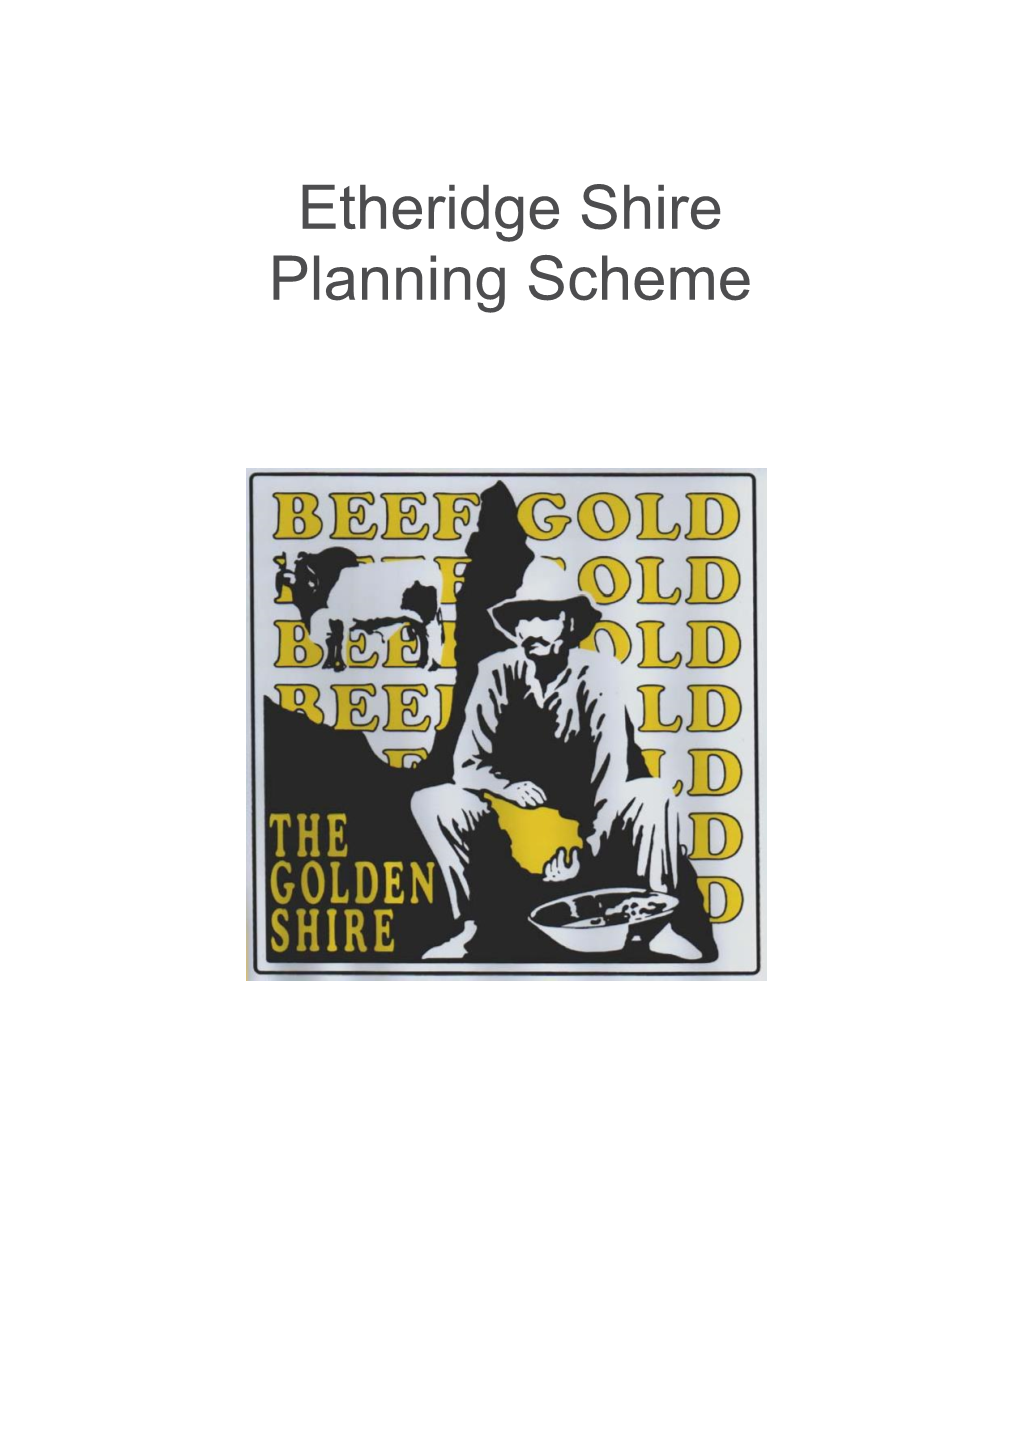 Etheridge Shire Planning Scheme